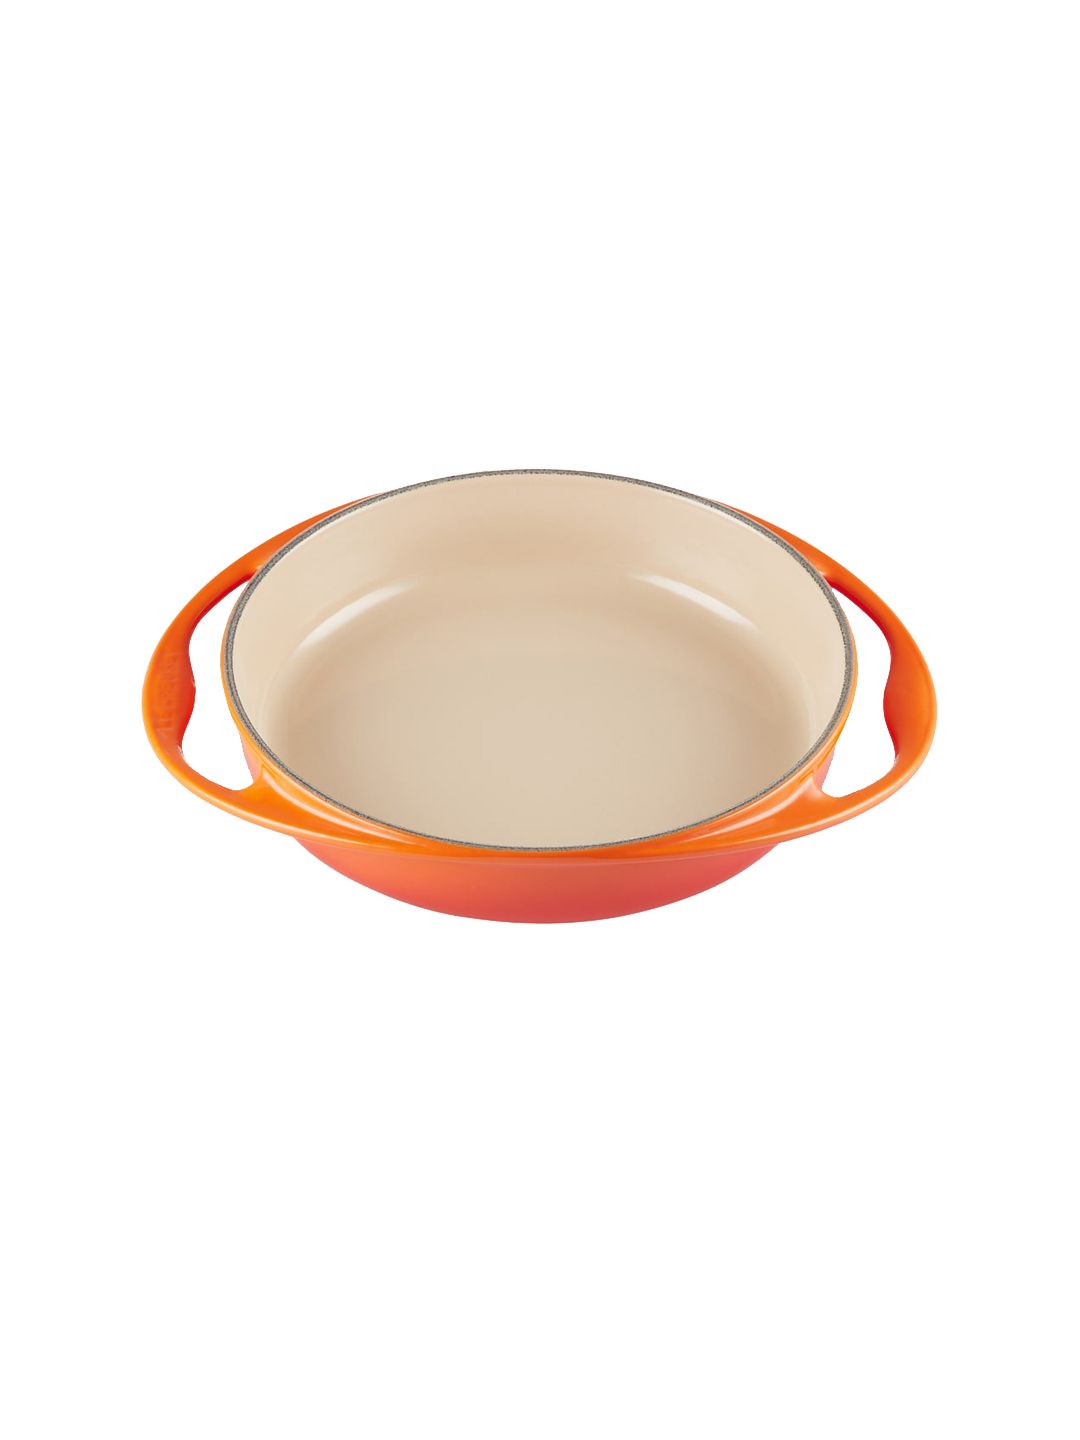 LE CREUSET Orange Solid Round Cookware Price in India